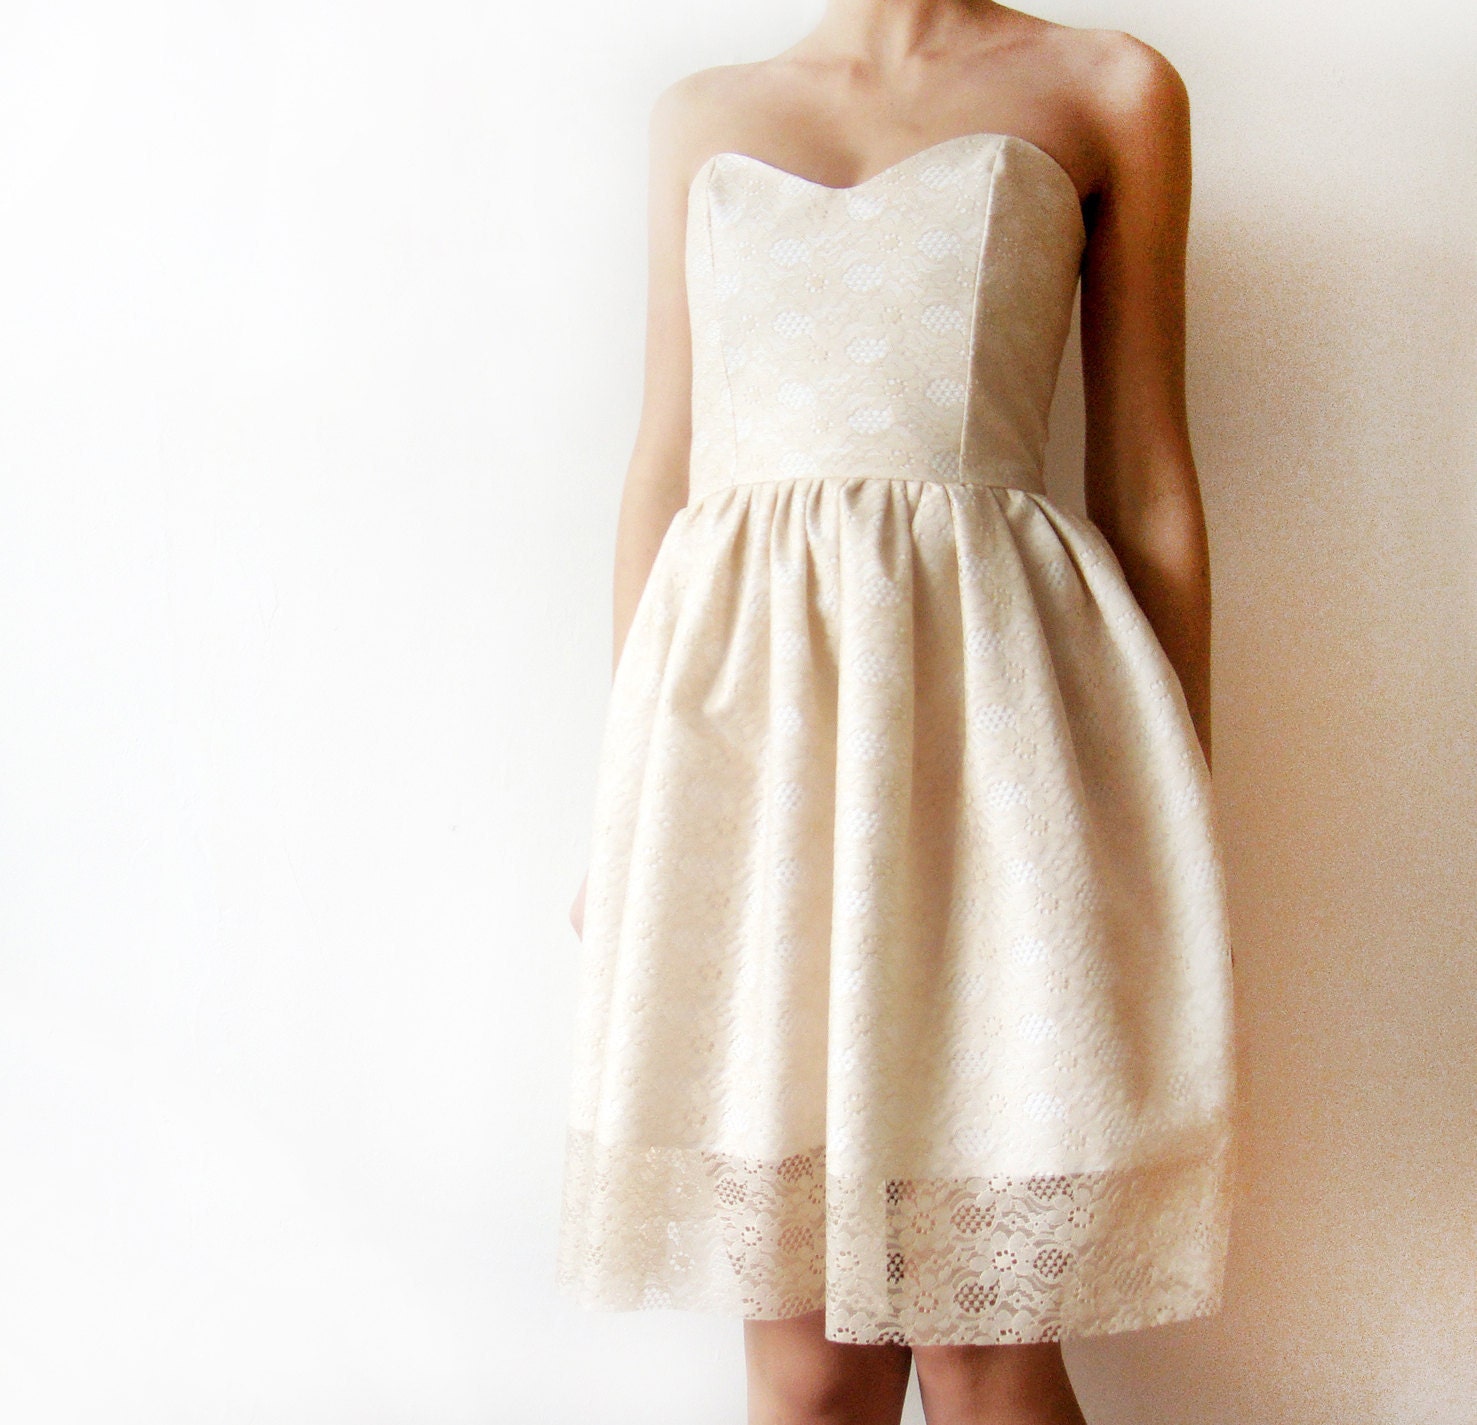 Ivory Dream Beige Ivory White Lace Dress Cotton bridesmaid dress 